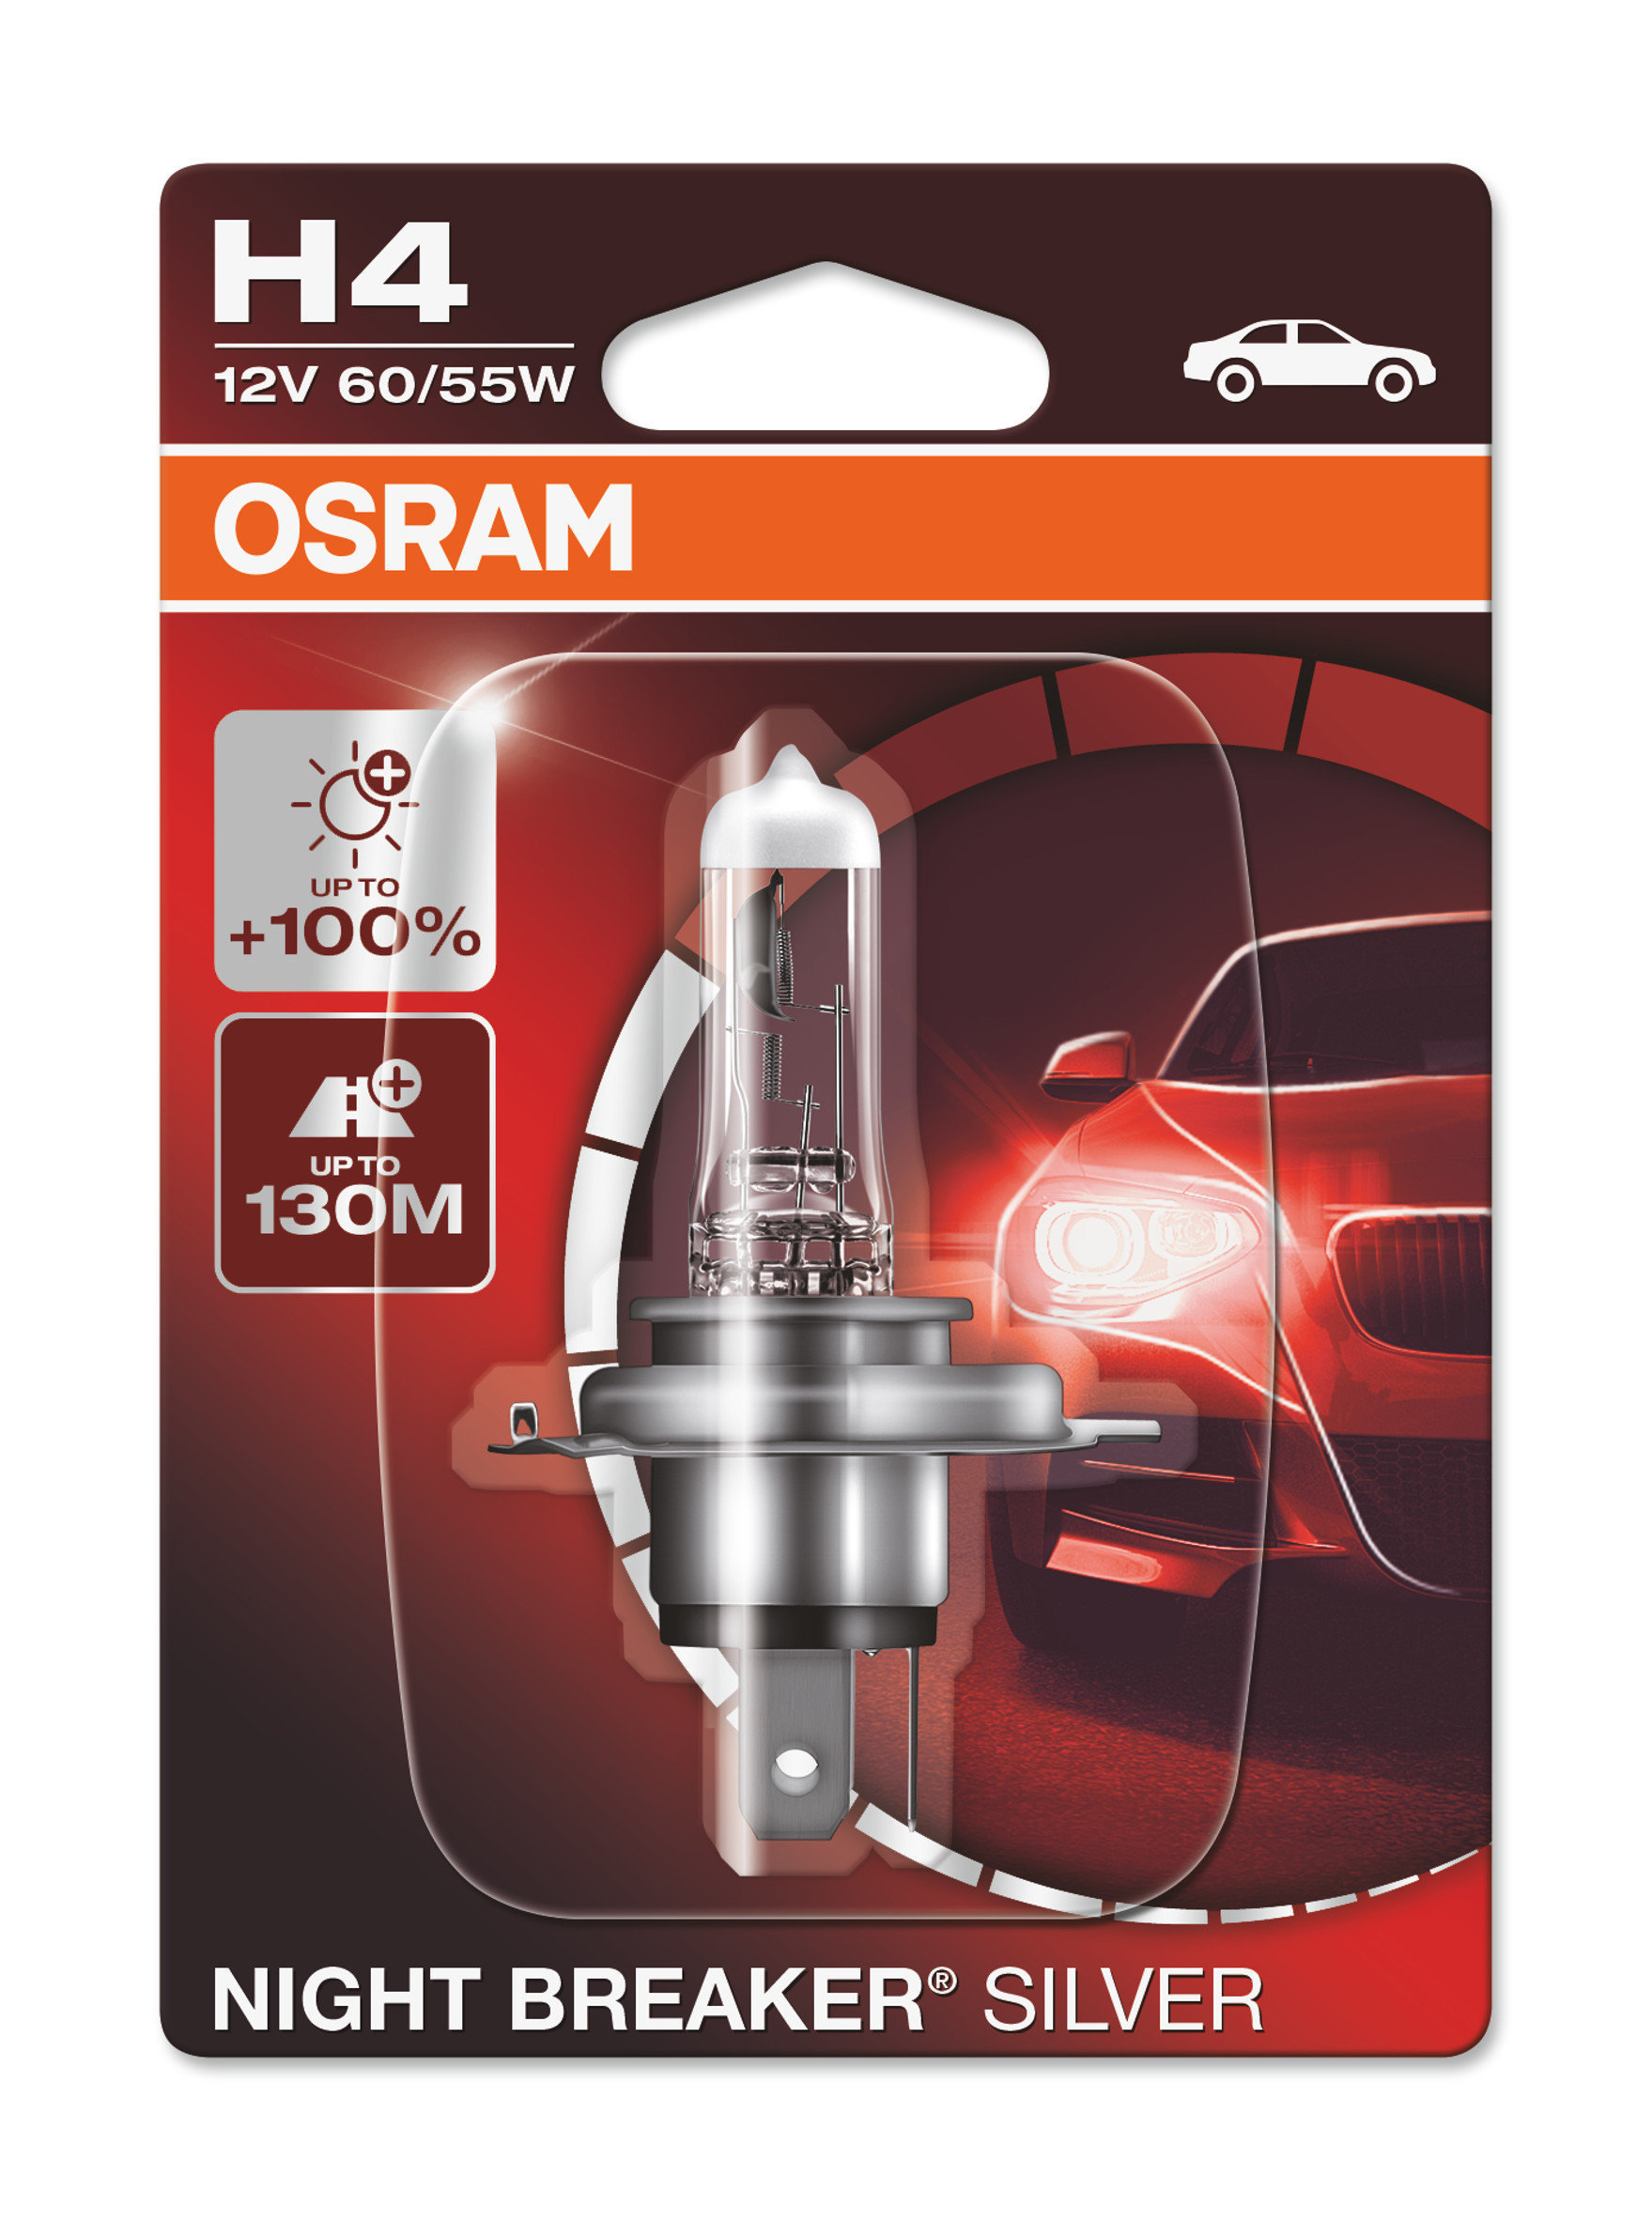 Osram Night Breaker Silver 55w headlight bulbs, H4 